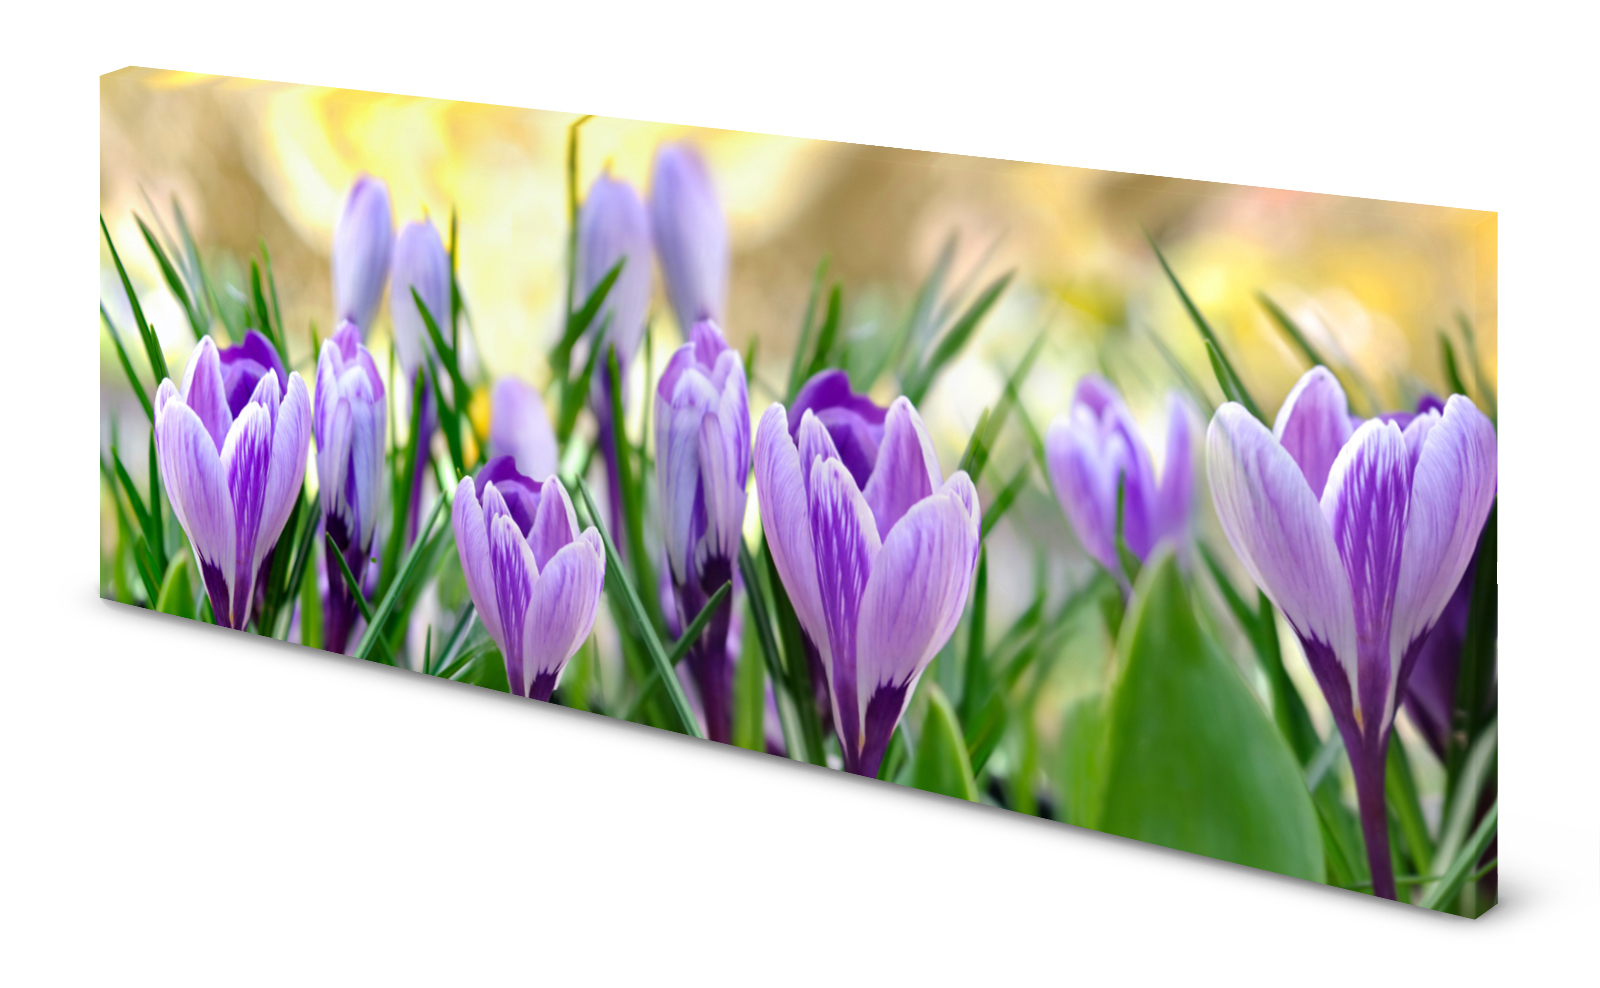 Magnettafel Pinnwand Bild Blumen Krokusse lila gekantet